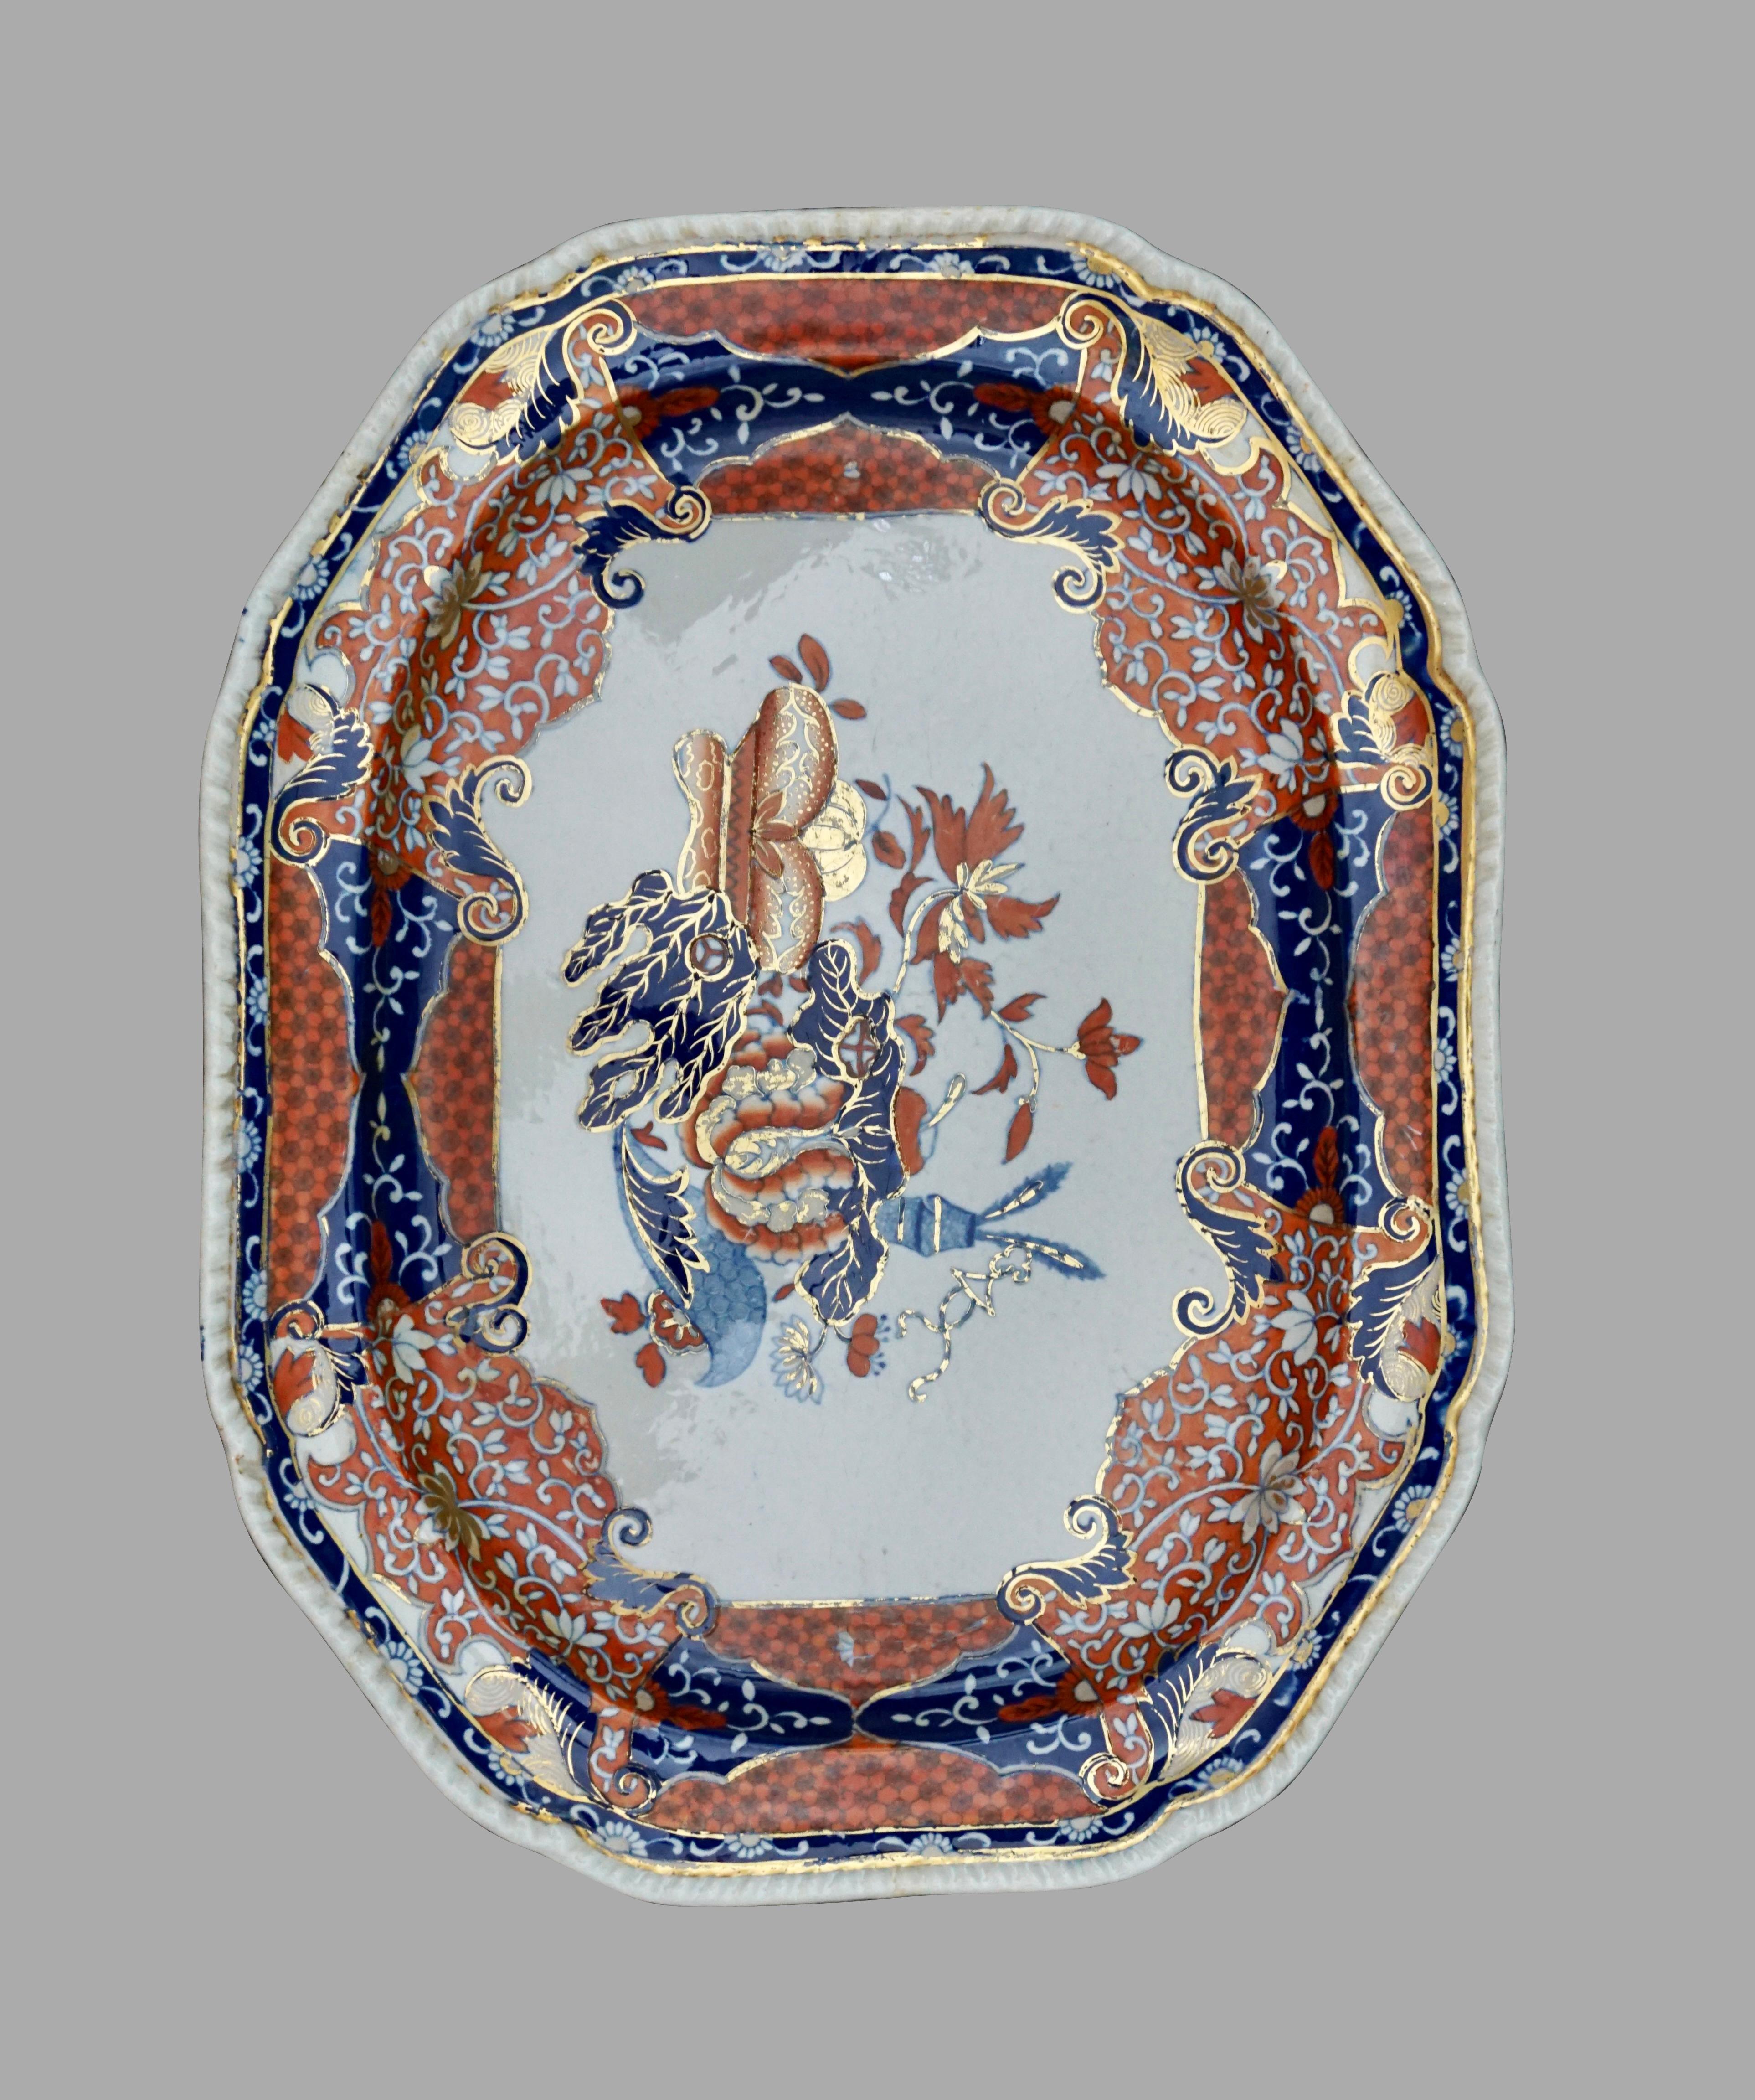 Late 19th Century Spode Porcelain Parcel Gilt Platter of Large Size in the Imari Palette